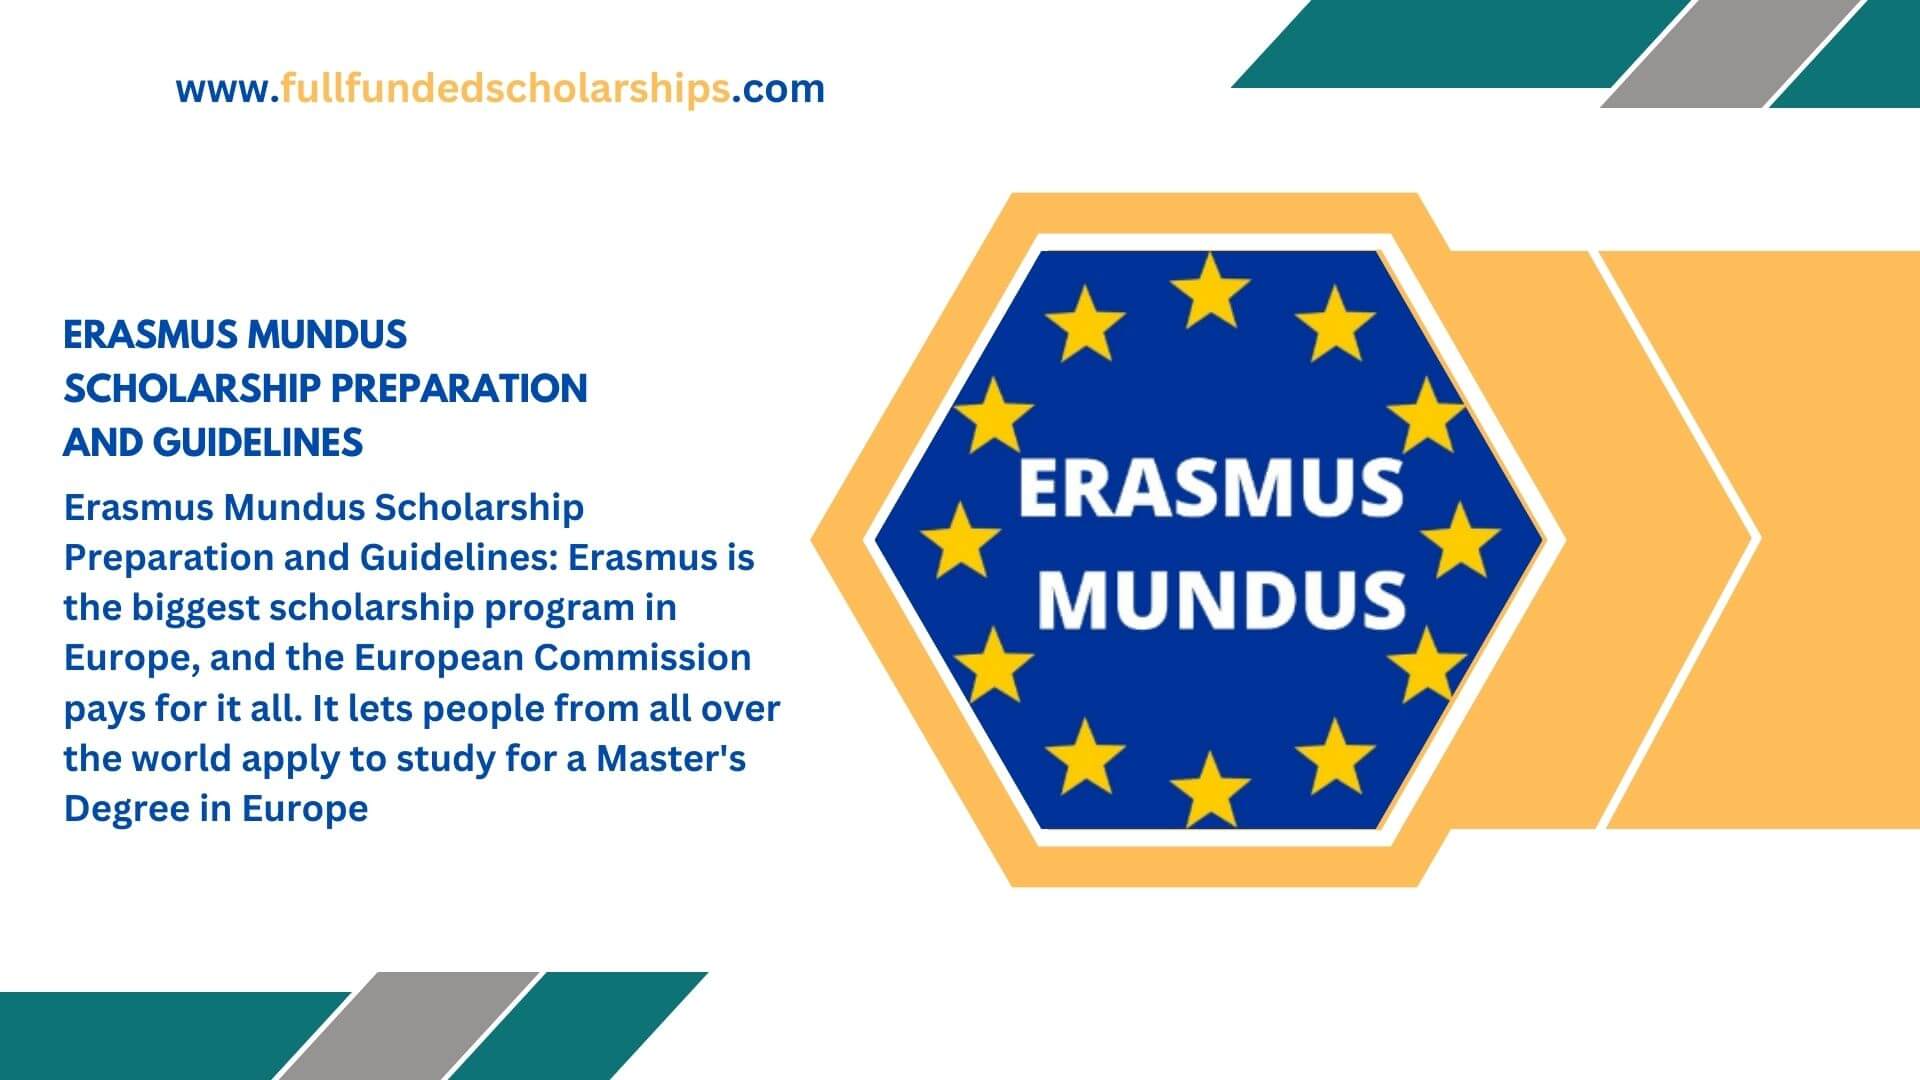 Erasmus Mundus Scholarship Preparation and Guidelines